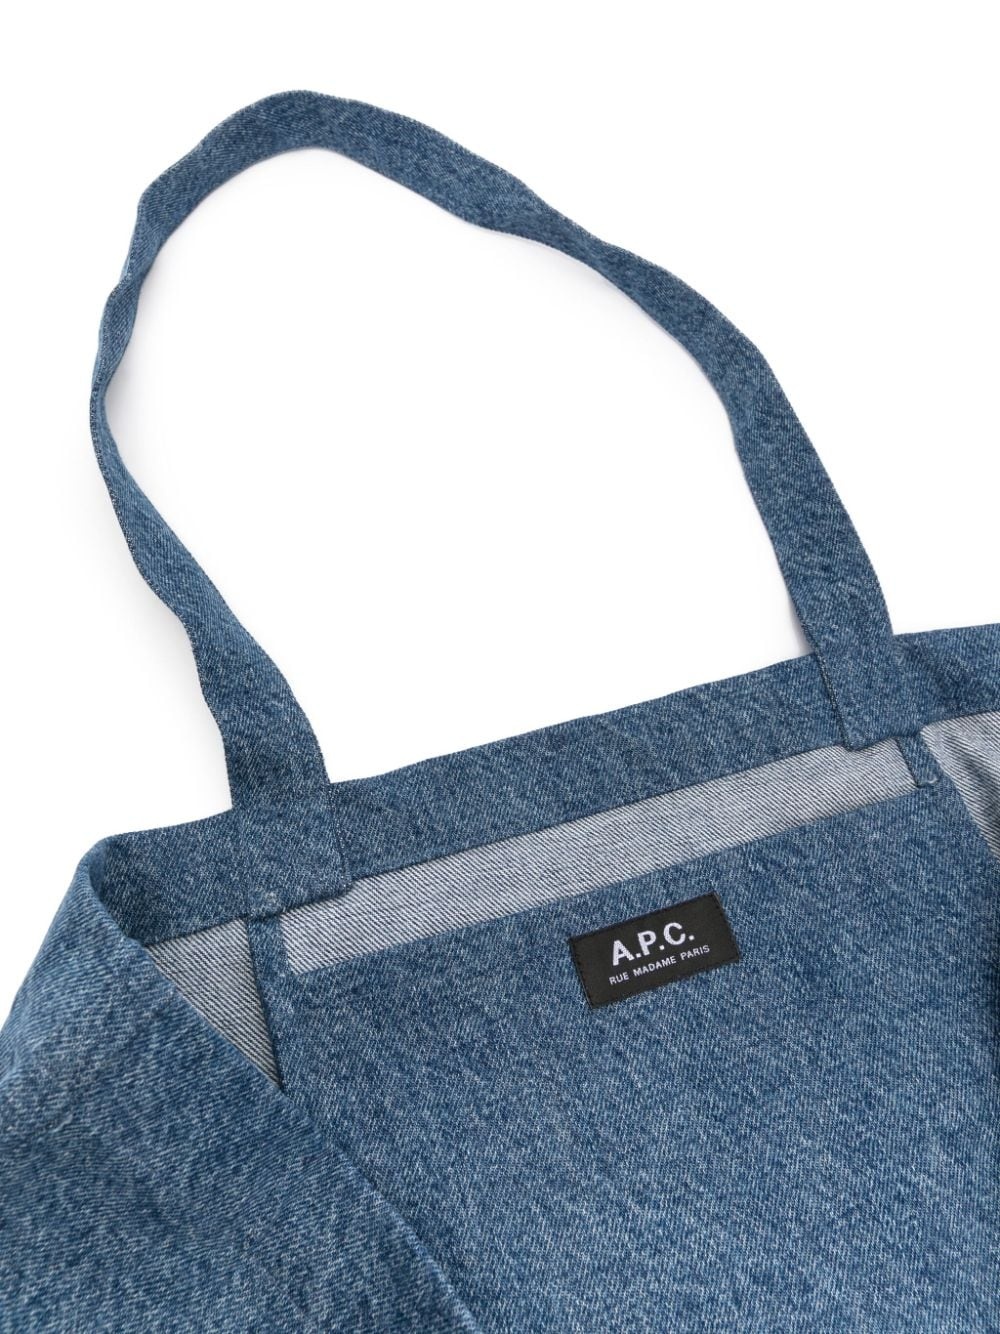 A.P.C Logo Denim Tote Bag - Blue